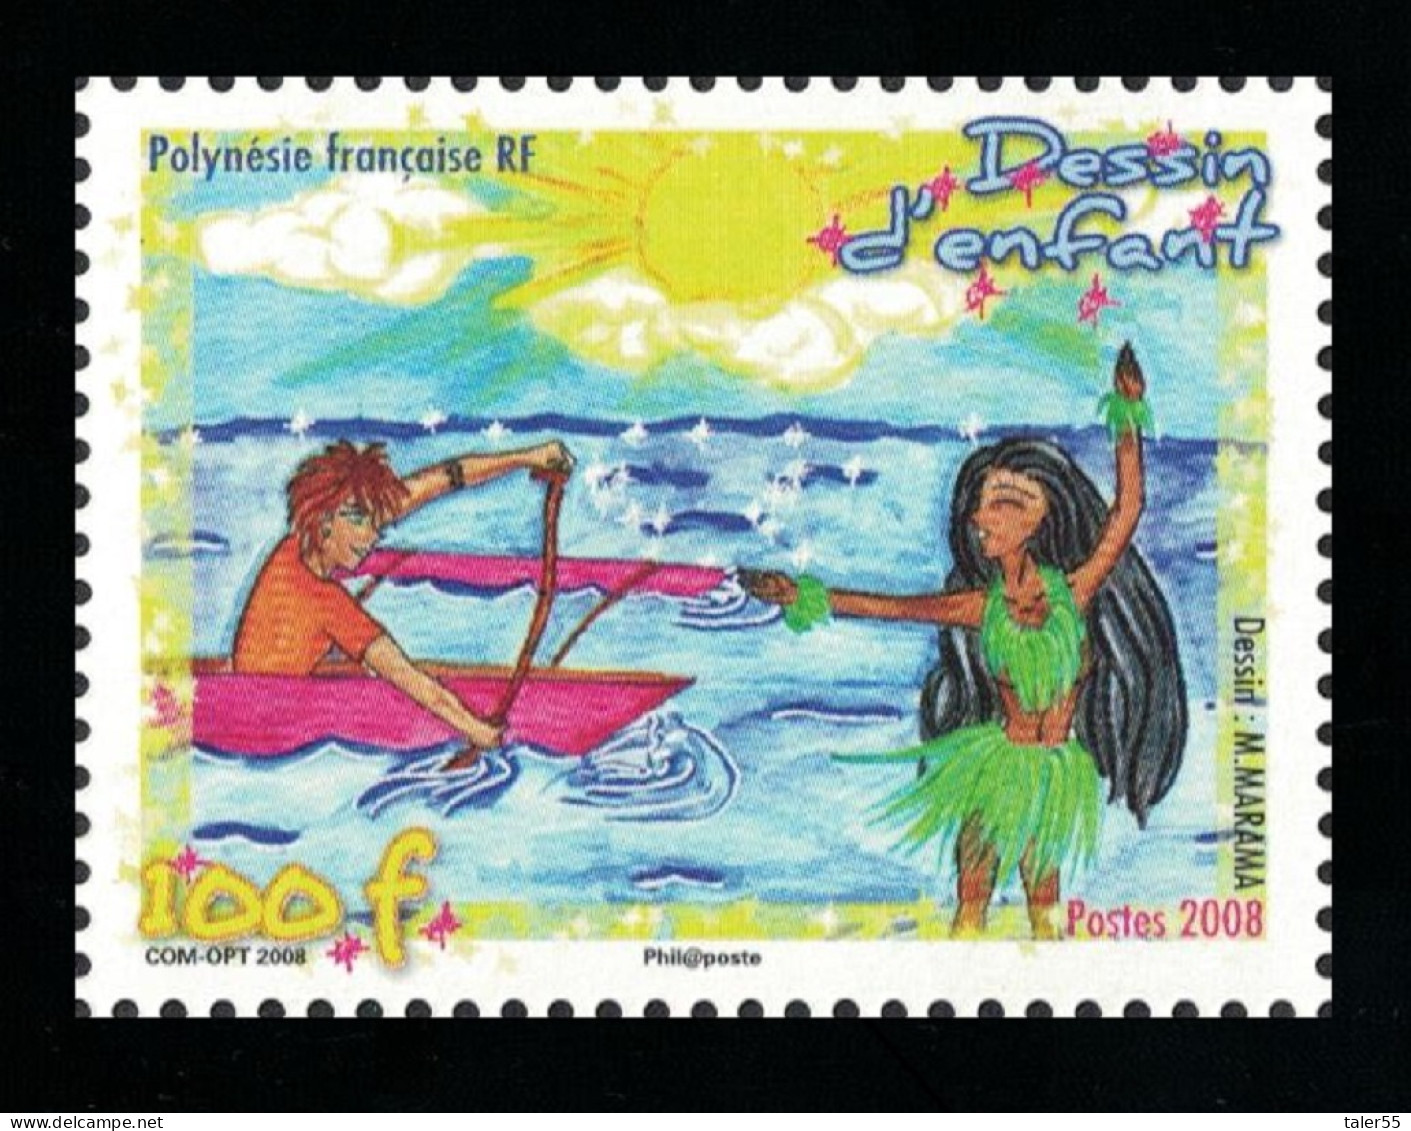 Fr. Polynesia Christmas 2008 Children's Drawings 2008 MNH SG#1109 MI#1061 - Ungebraucht